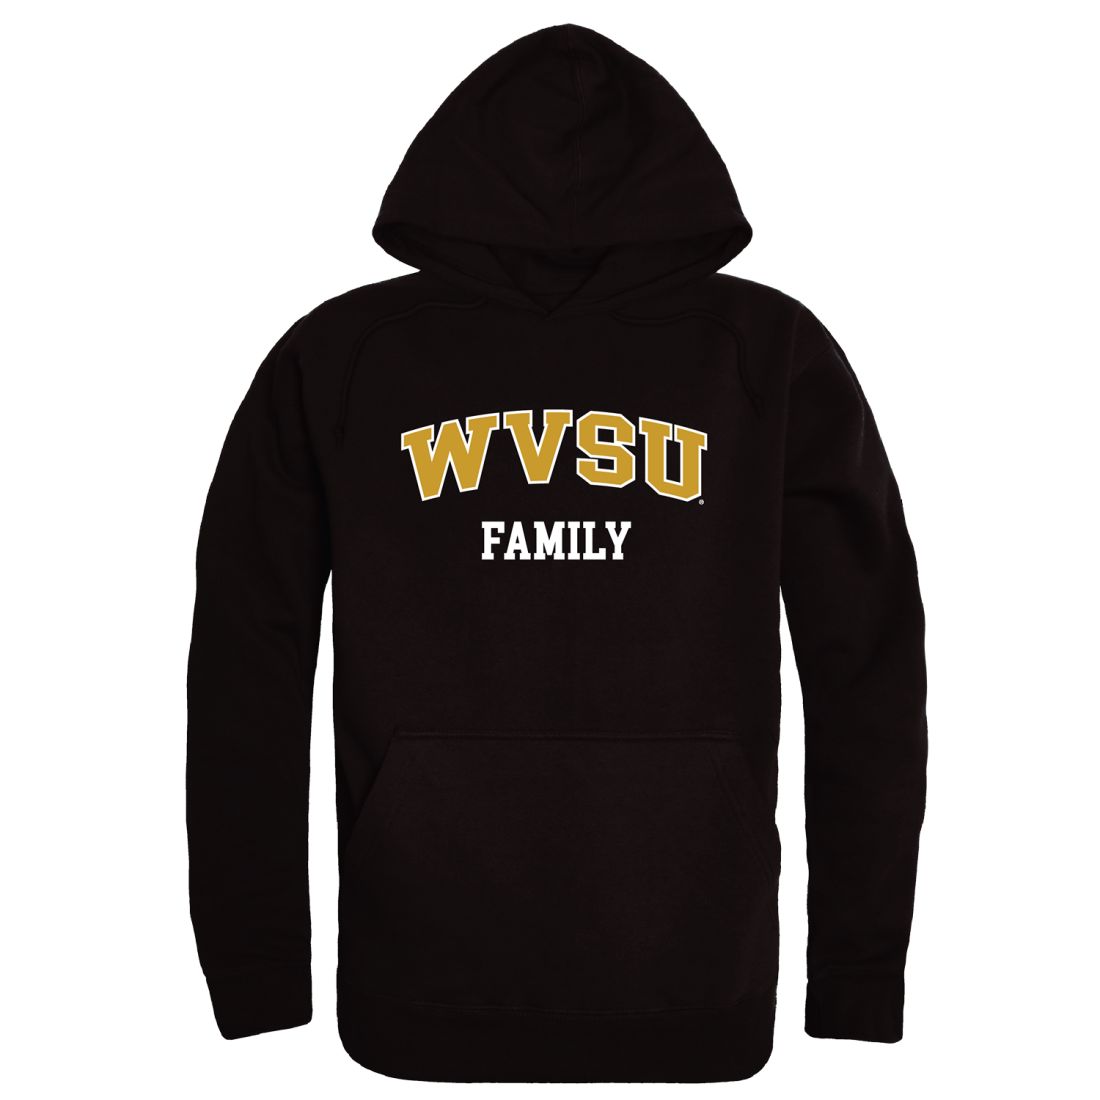 WVSU West Virginia State University Yellow Jackets Family Hoodie Sweatshirts